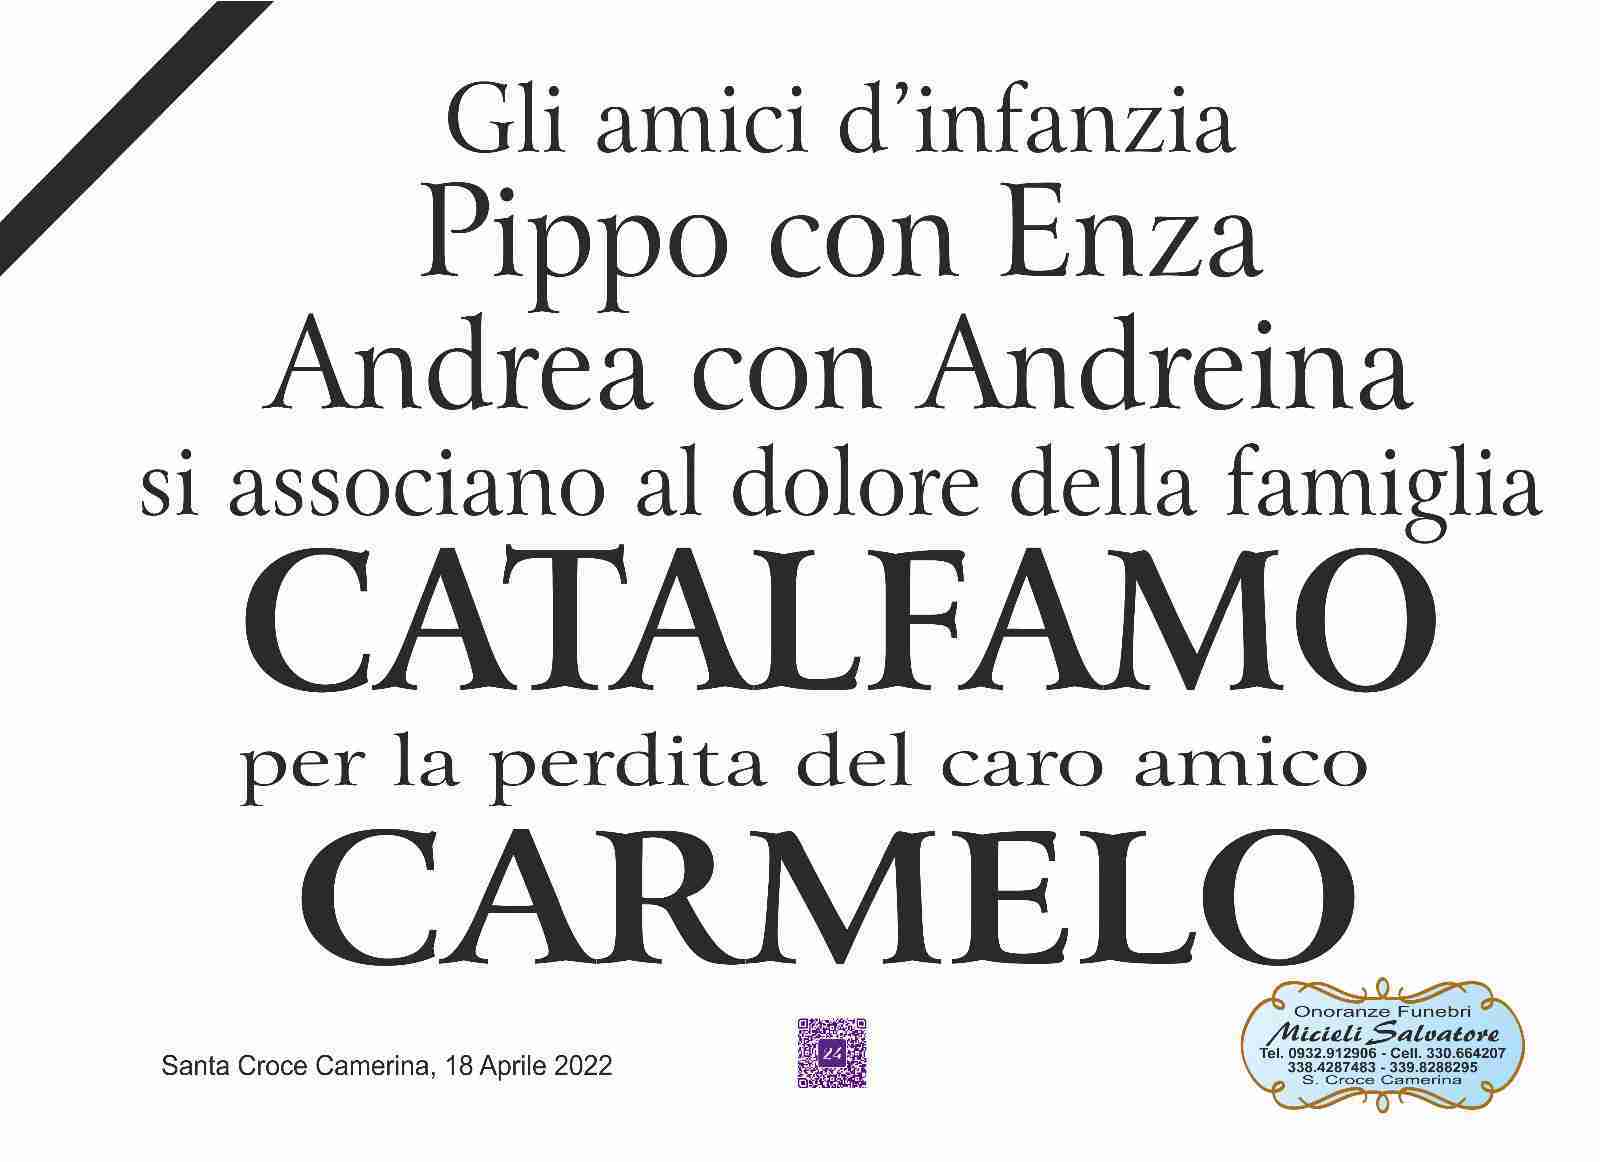 Angelo Carmelo Catalfomo